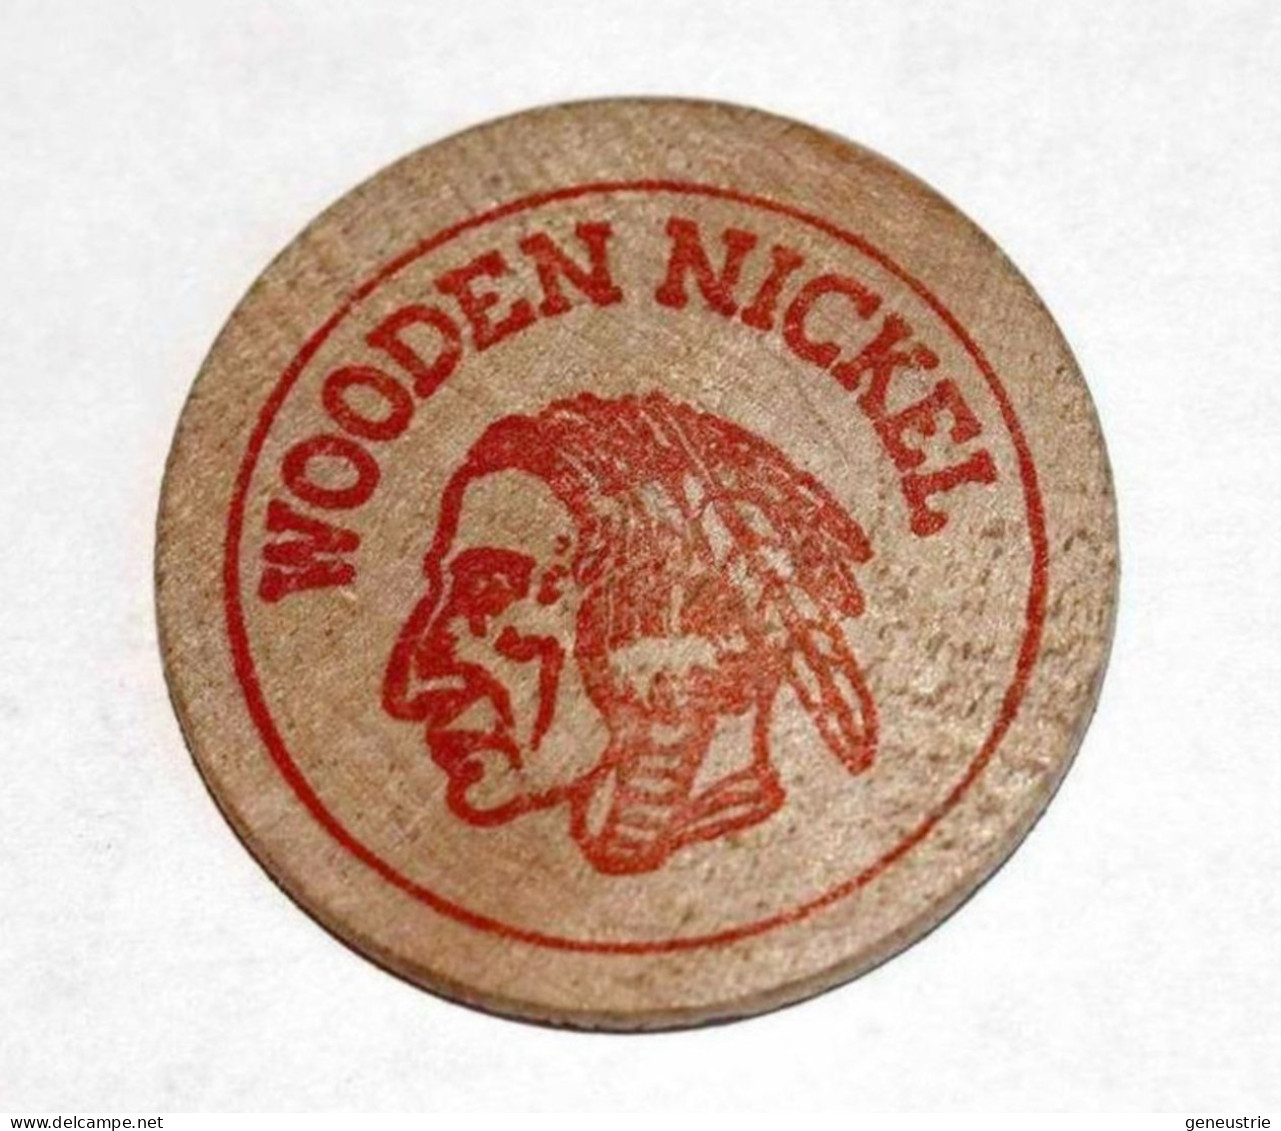 Wooden Nickel - Jeton Bois 1979 Monnaie Tête D'Indien - The Cola Clan Houston - Coca Cola - Etats-Unis - Wooden Token - Noodgeld